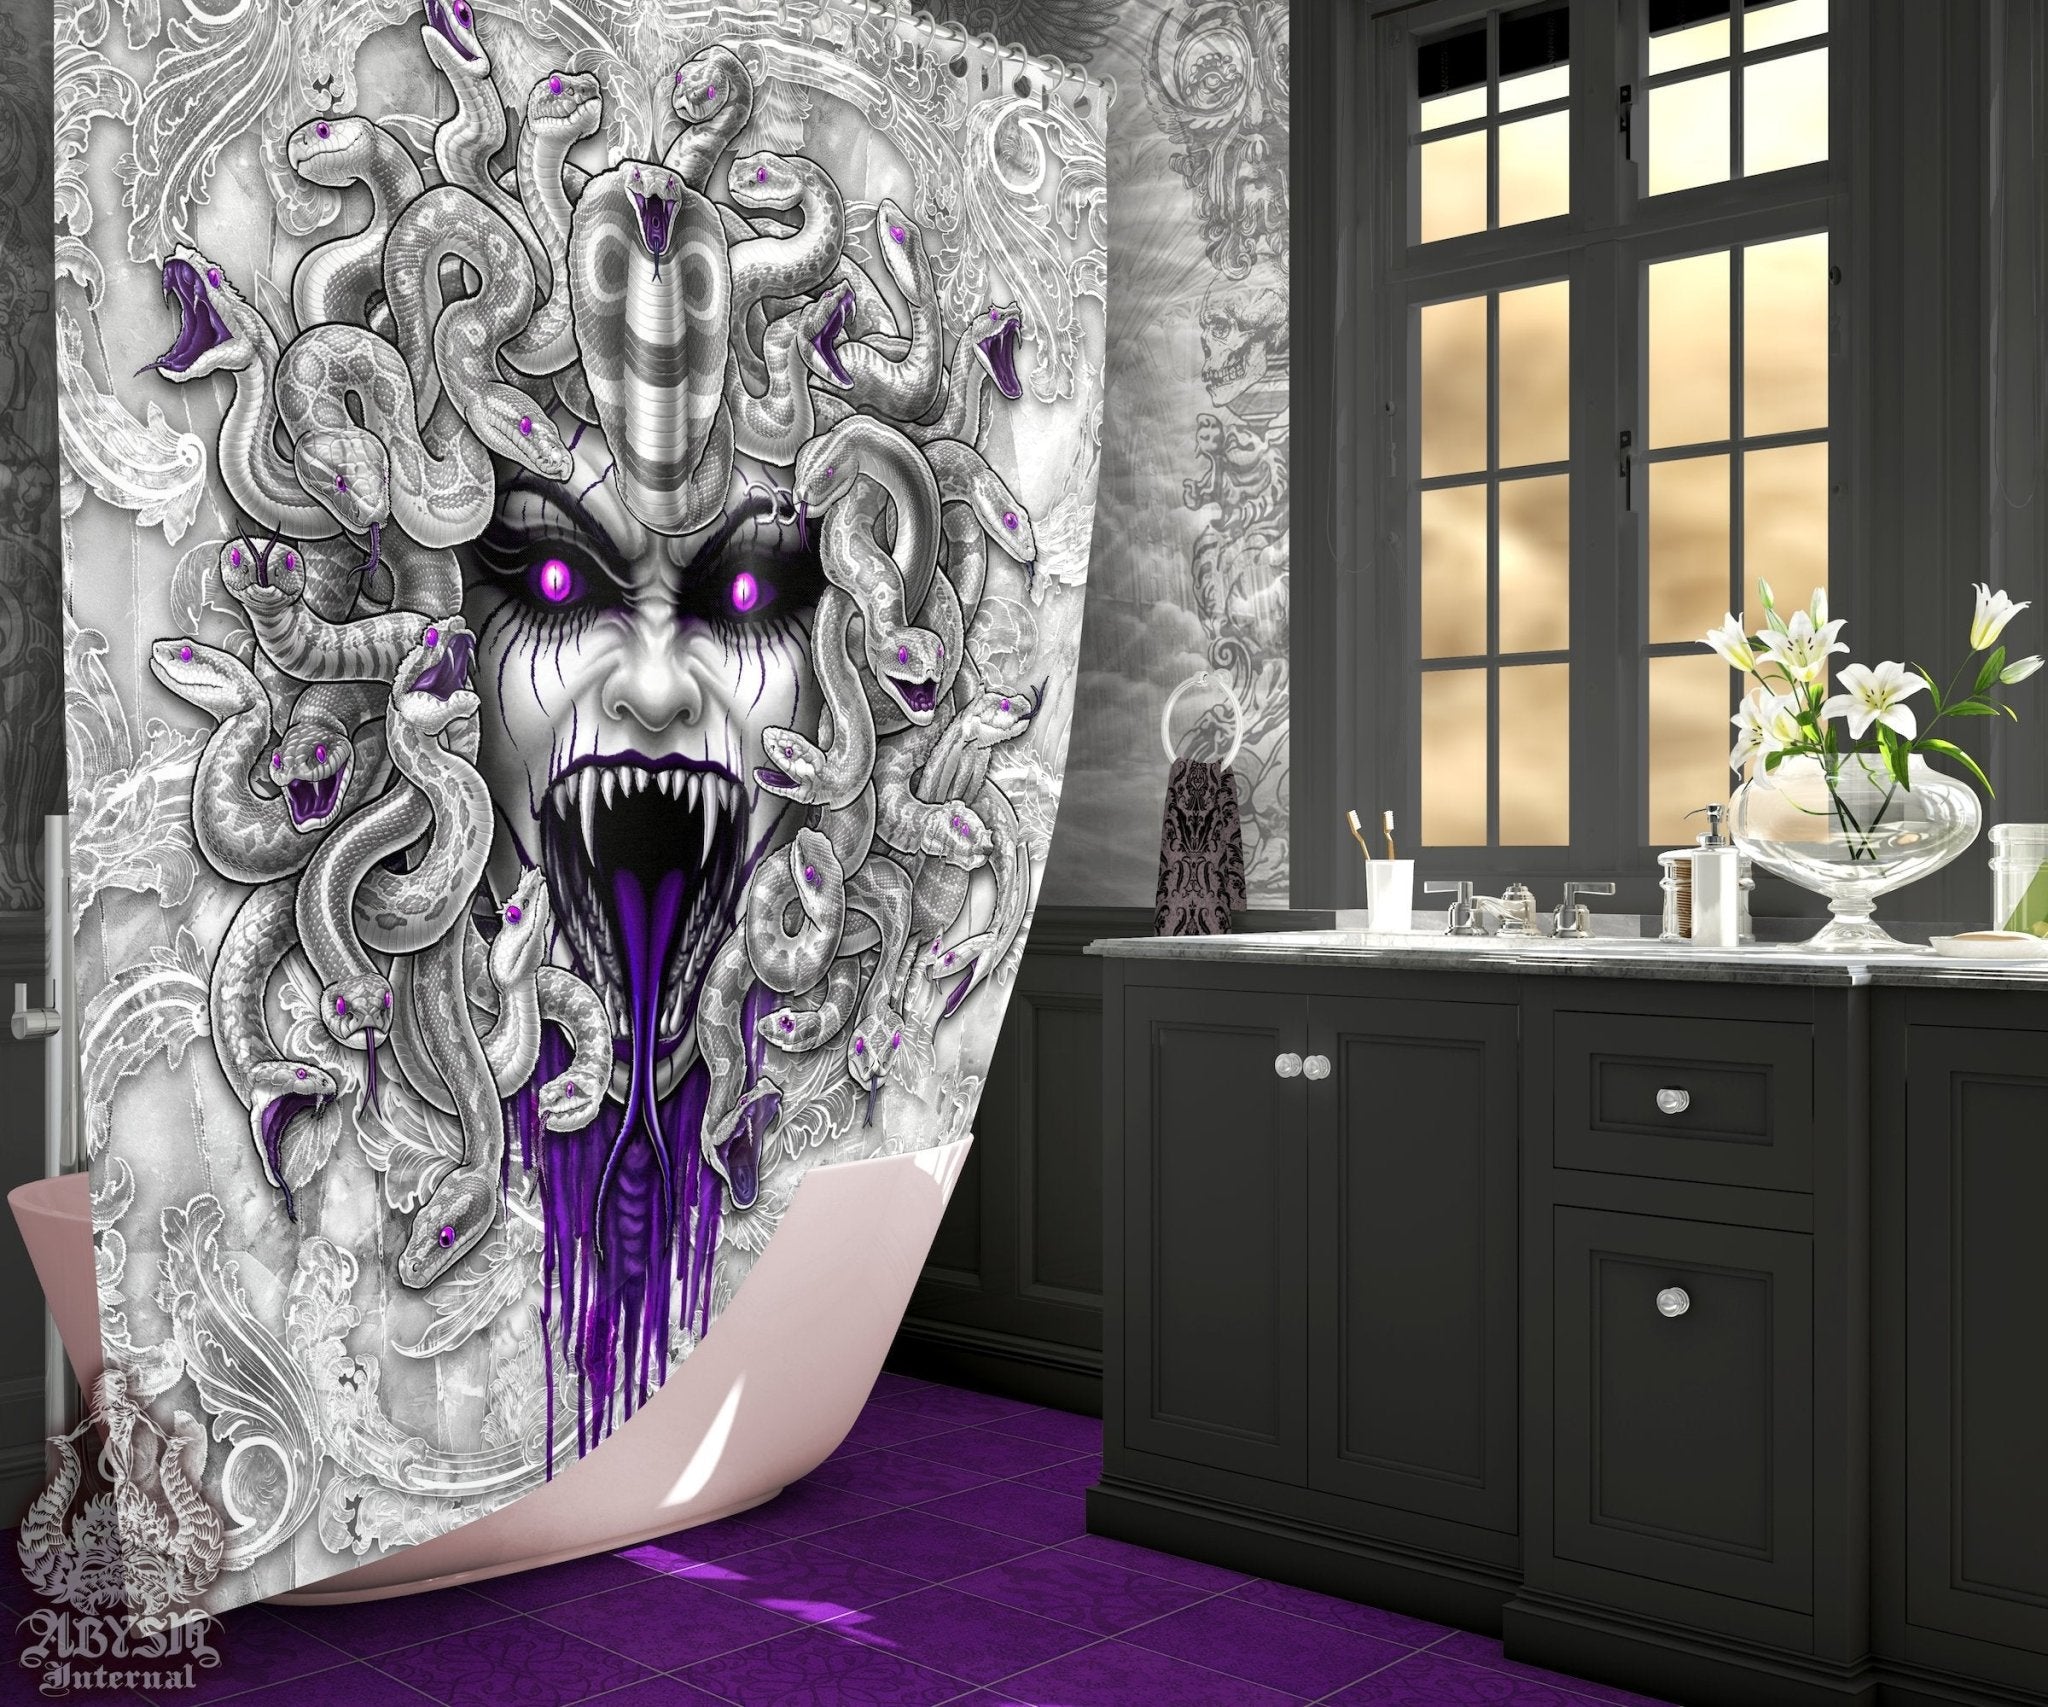 Horror Shower Curtain, Halloween, Gothic Bathroom Decor - Enraged Medusa, White Goth & Purple Snakes - Abysm Internal